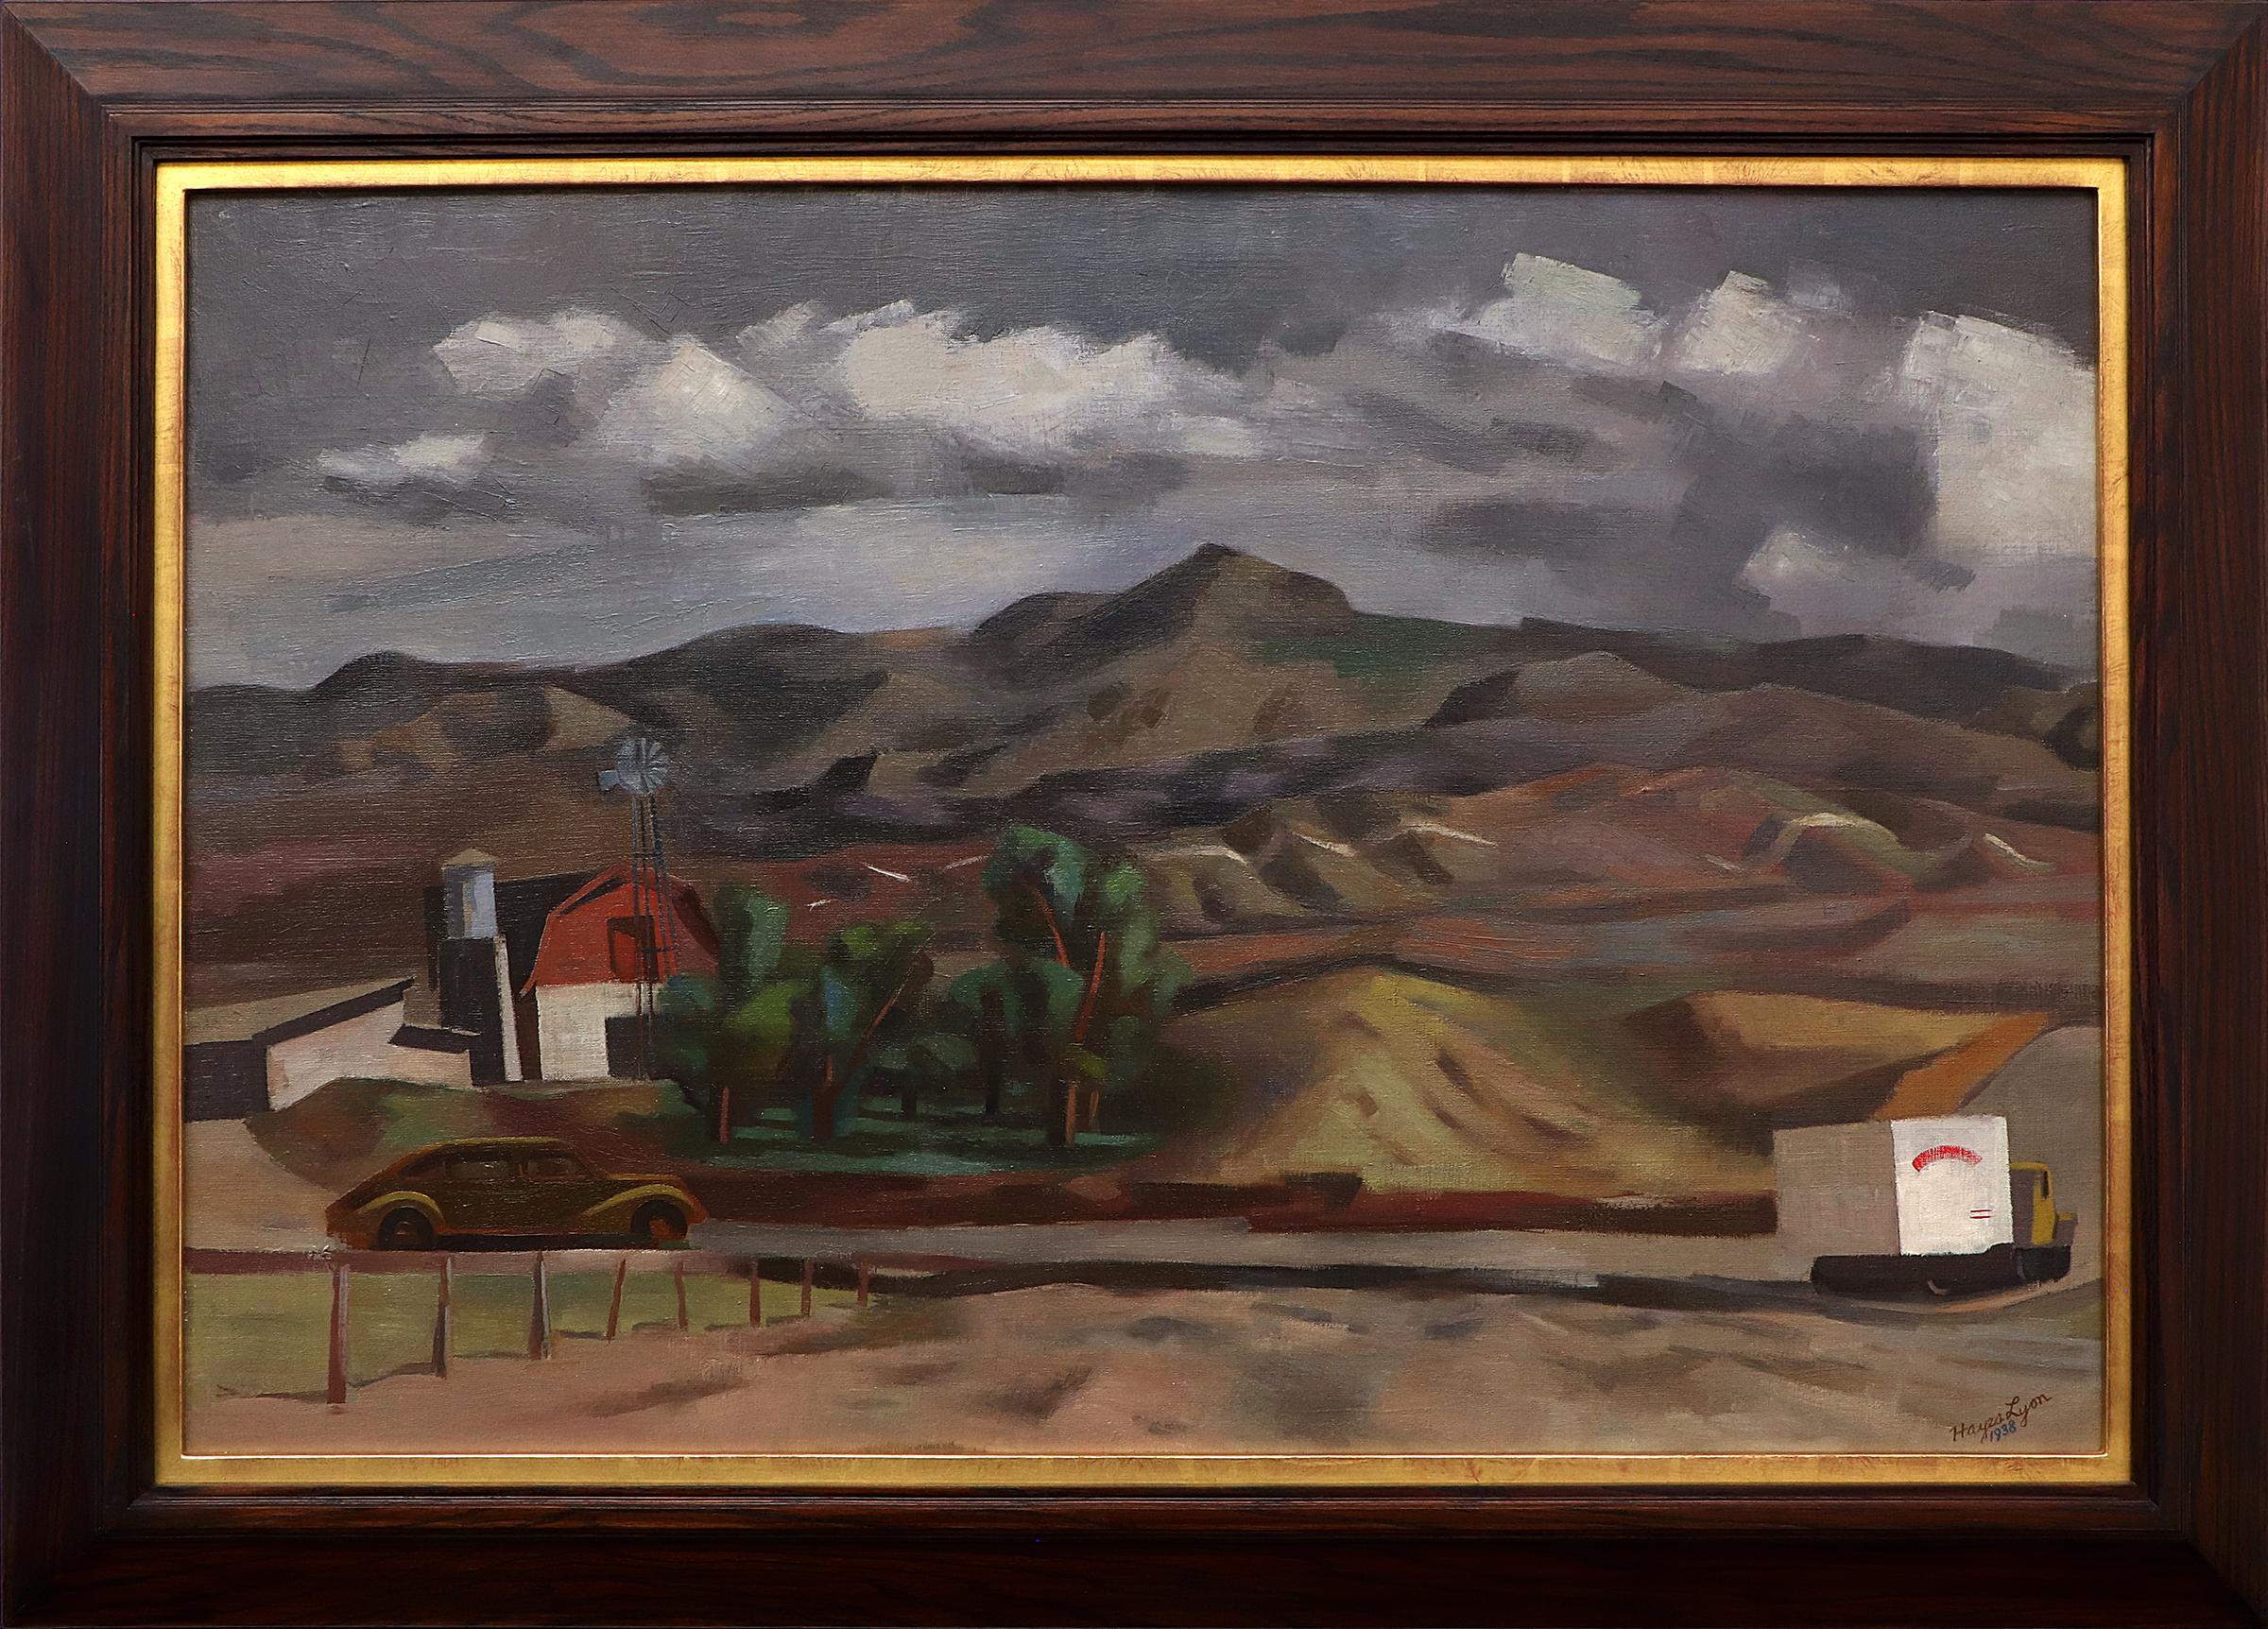 Hayes Lyon Landscape Painting - The Hillside, Colorado, 1930s Landscape Oil Painting, Hillside Farm with Truck